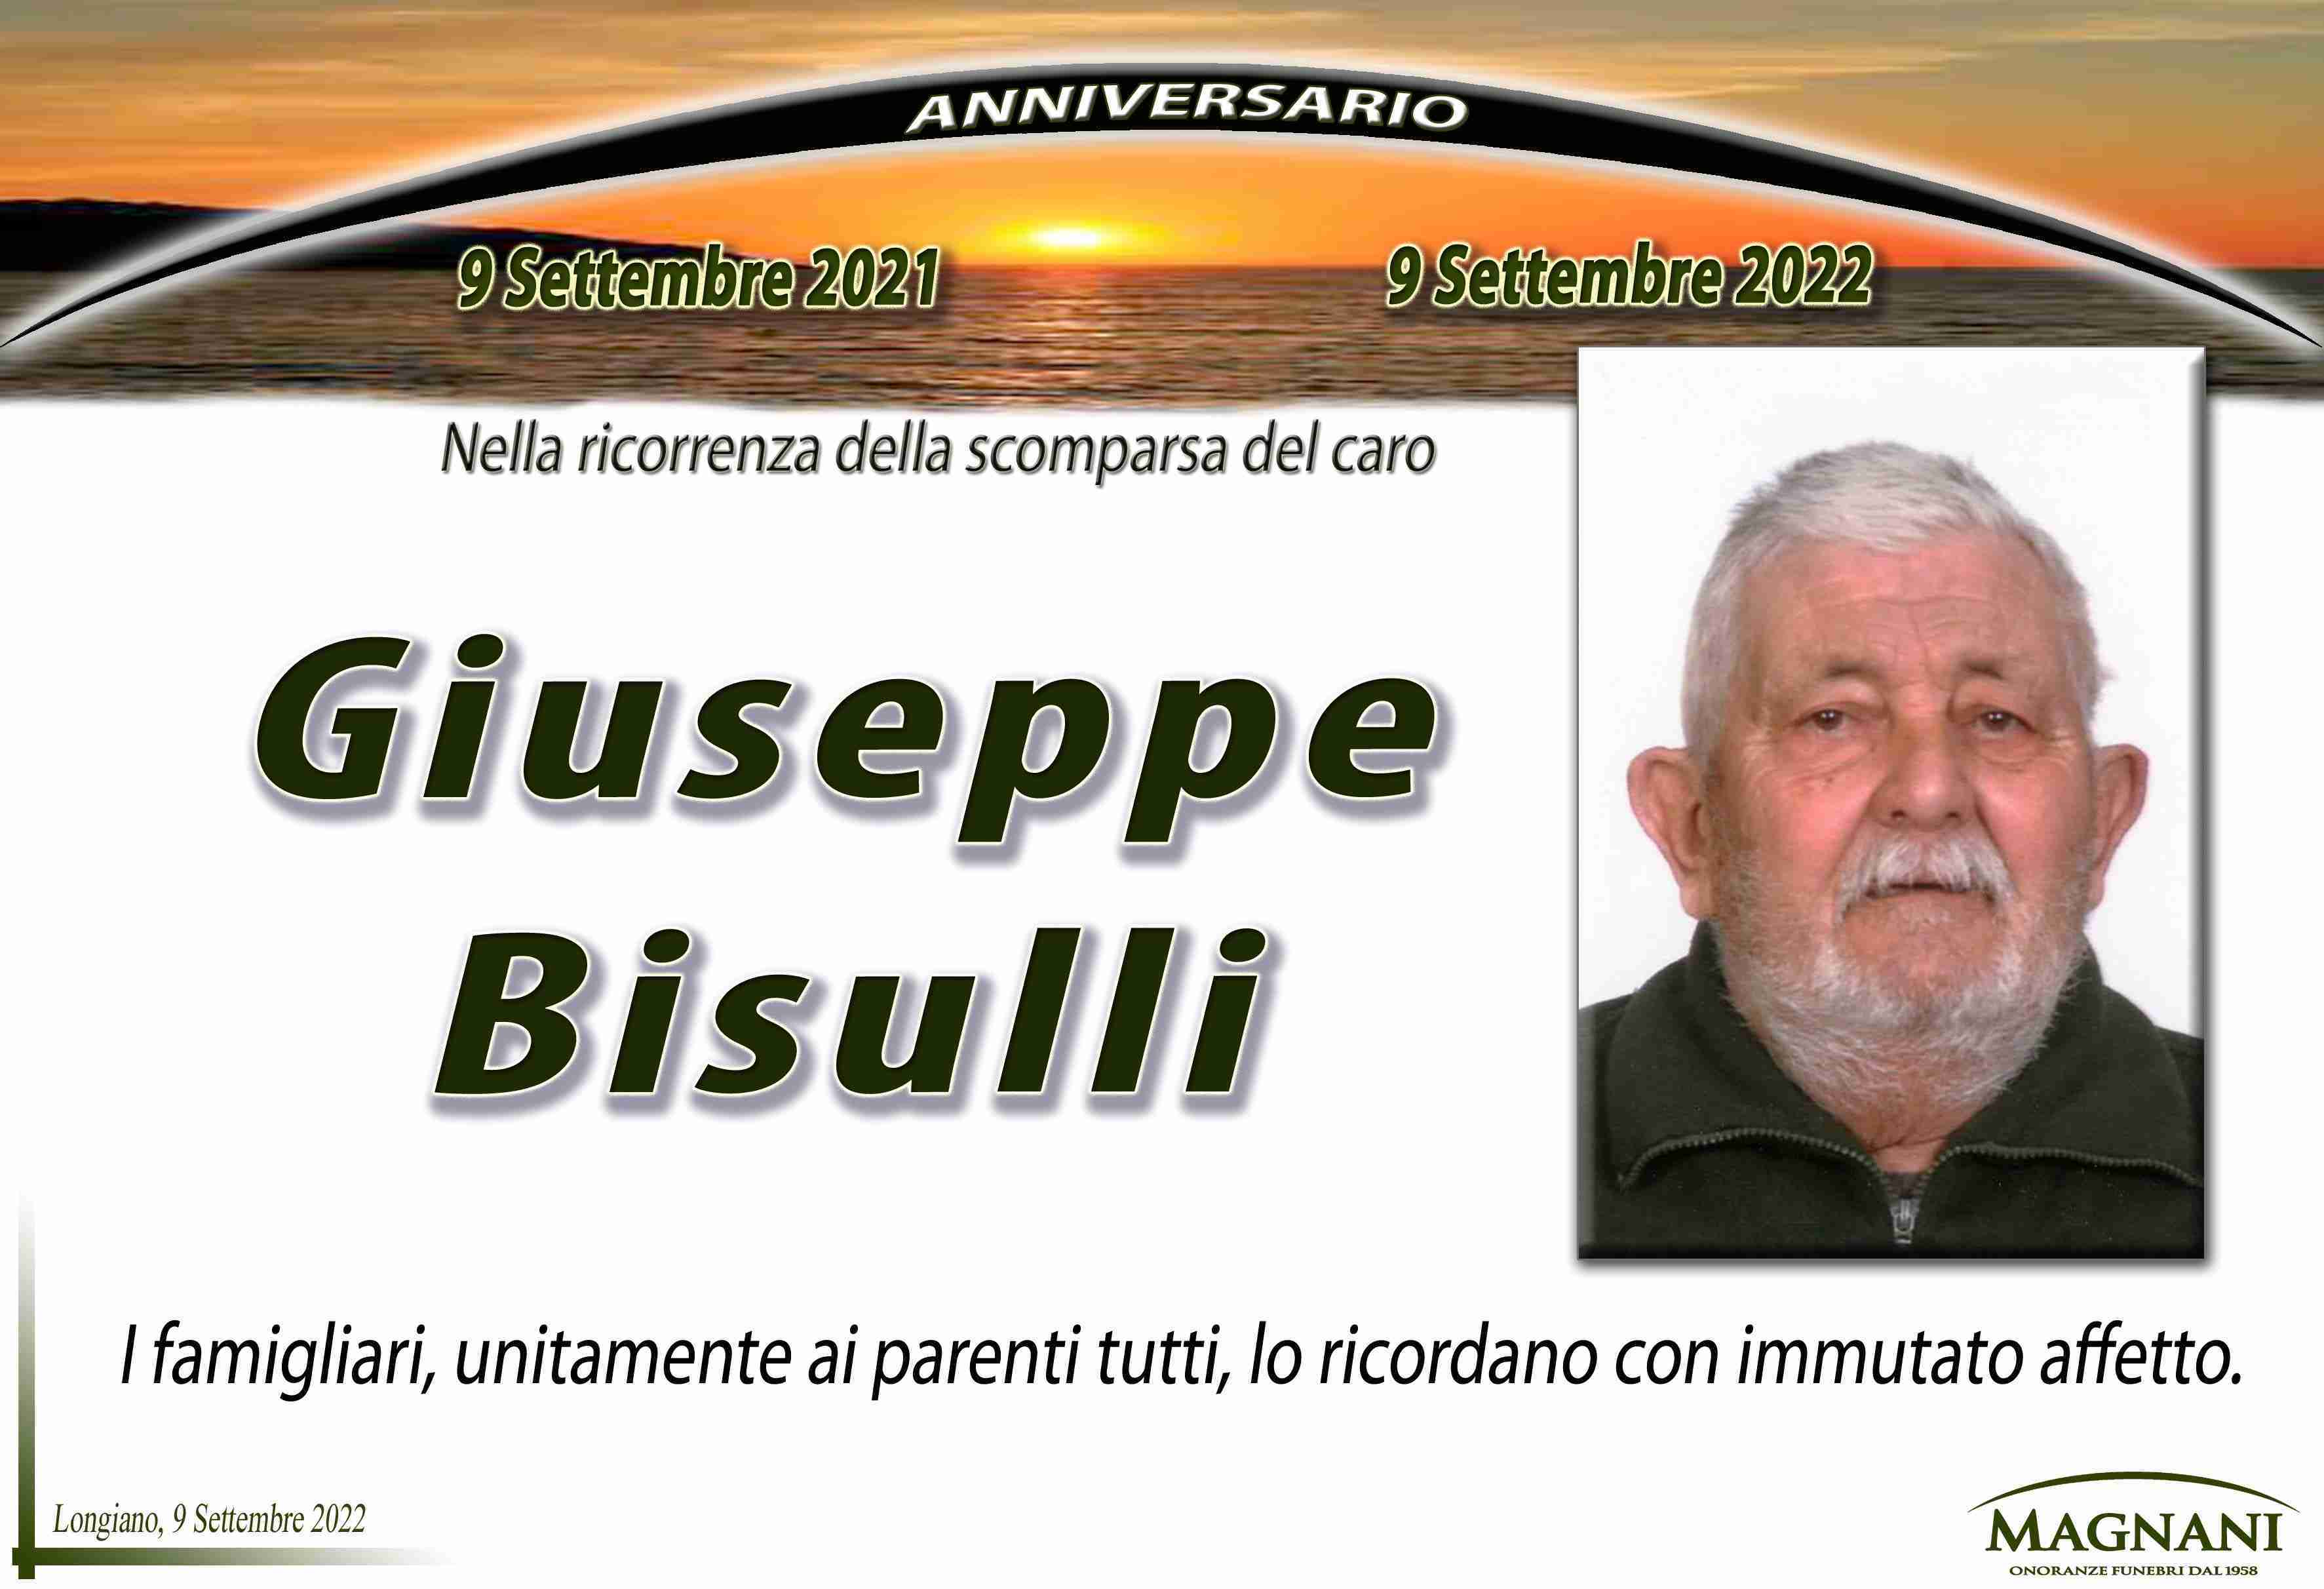 Giuseppe Bisulli